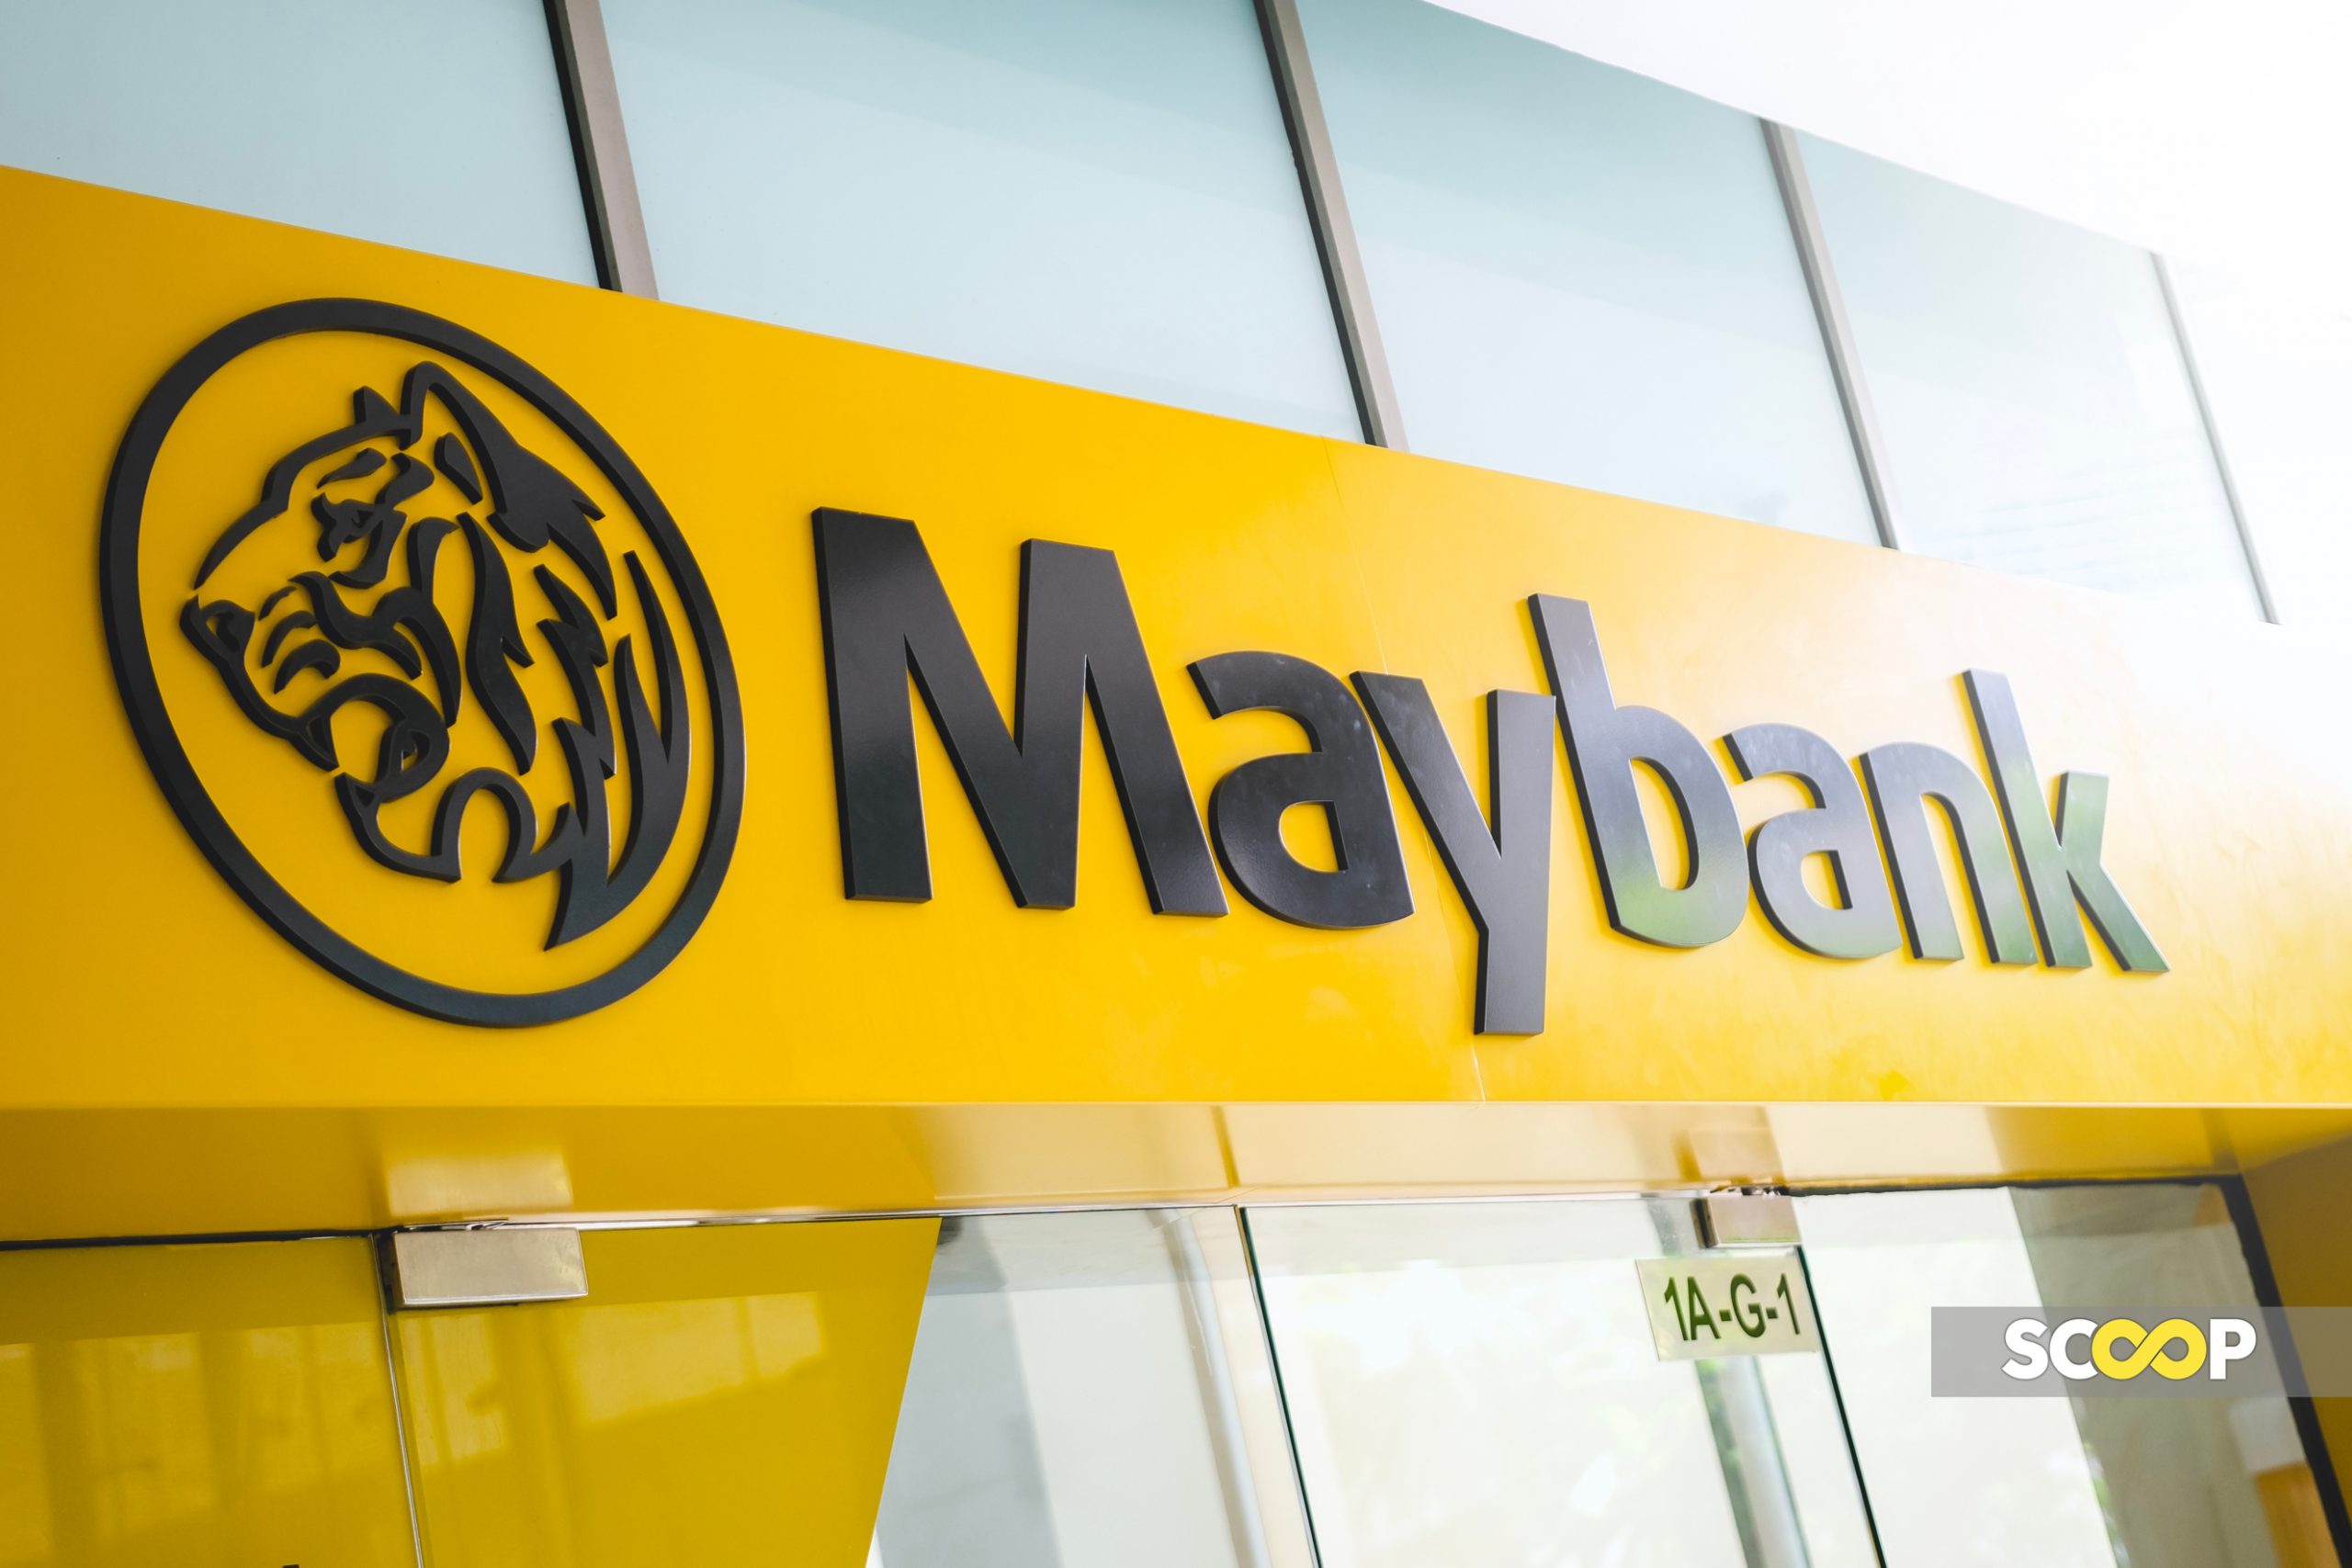 Maybank app users urge quick fix to Tabung service disruption